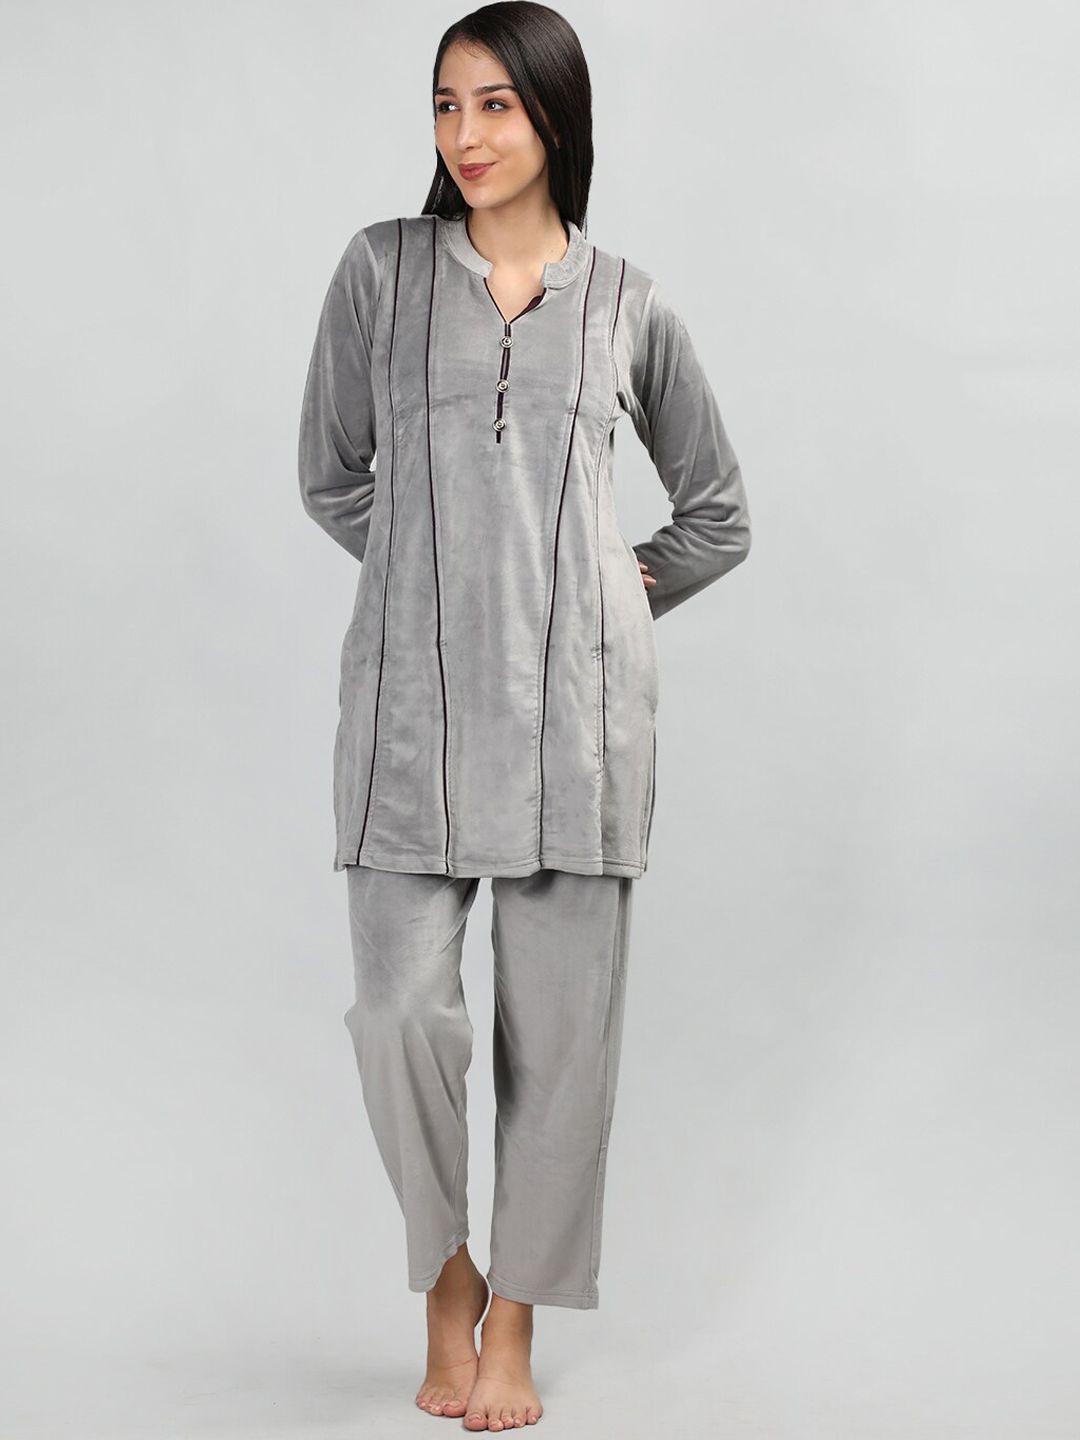 duchess mandarin collar velvet top with pyjamas